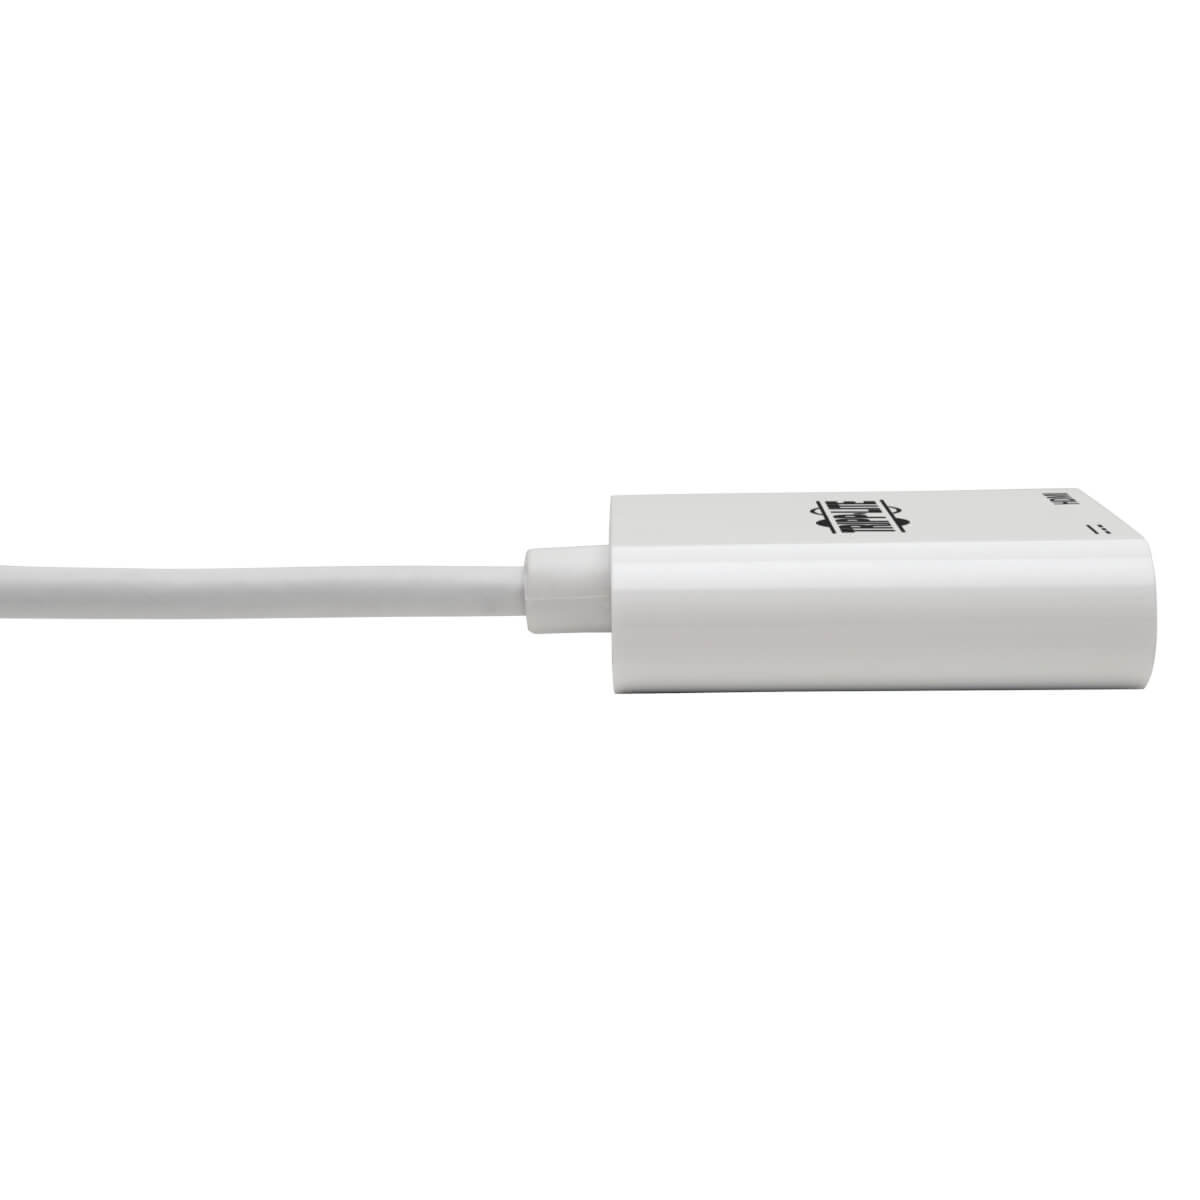 USB-C Adapter 4K at 30Hz PD Charging